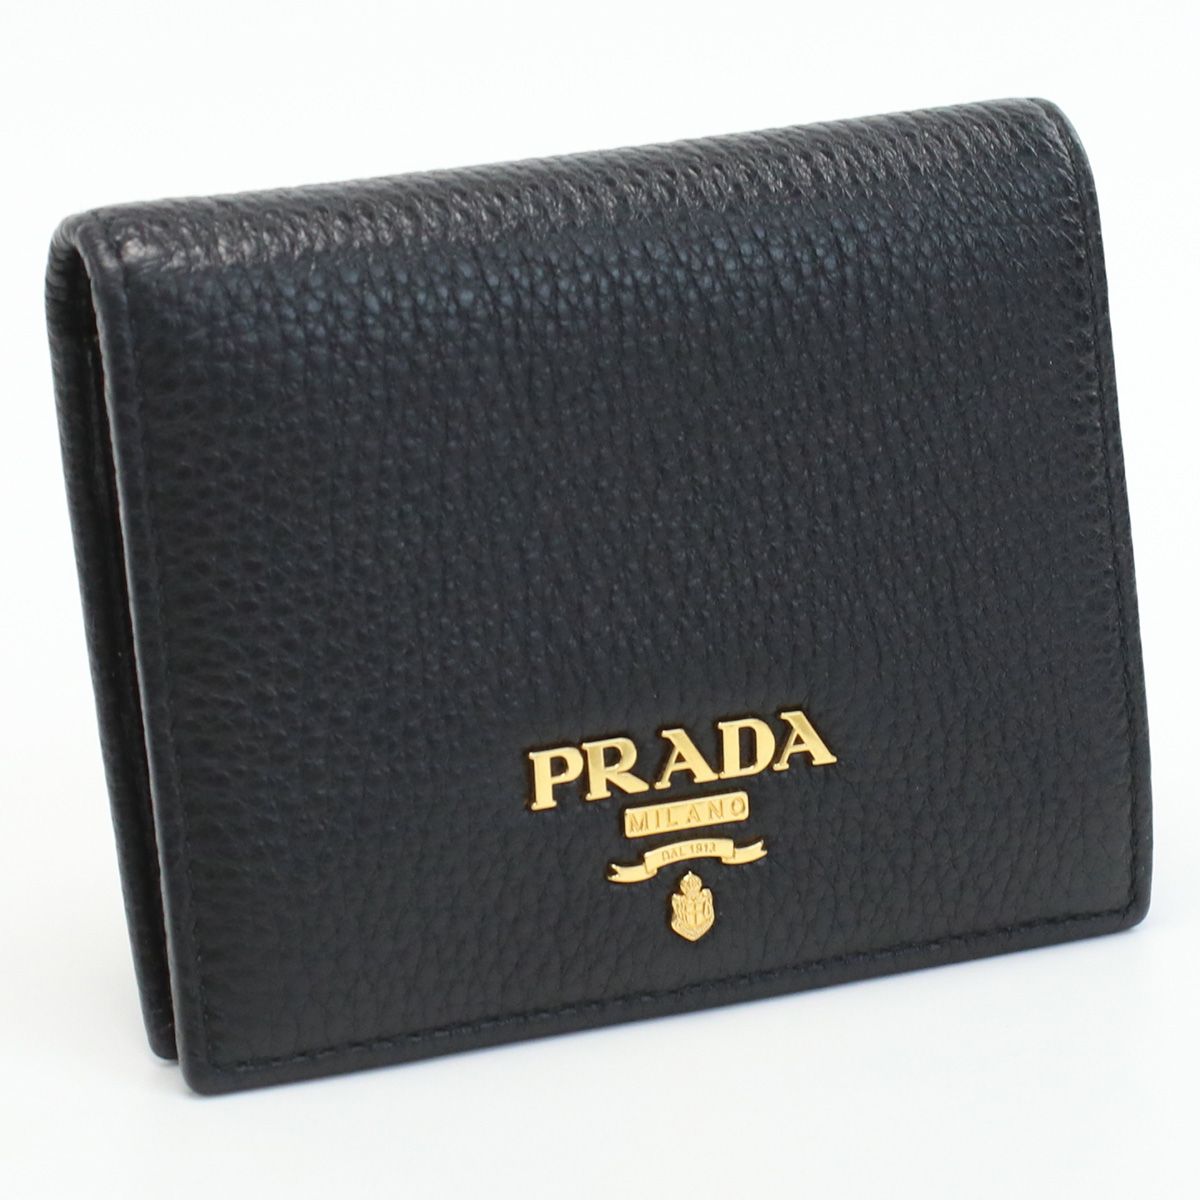 PRADA プラダ サフィアーノトライアングル財布 1MV204 2E3A F0002 二折財布小銭入付き レザー ユニセックス